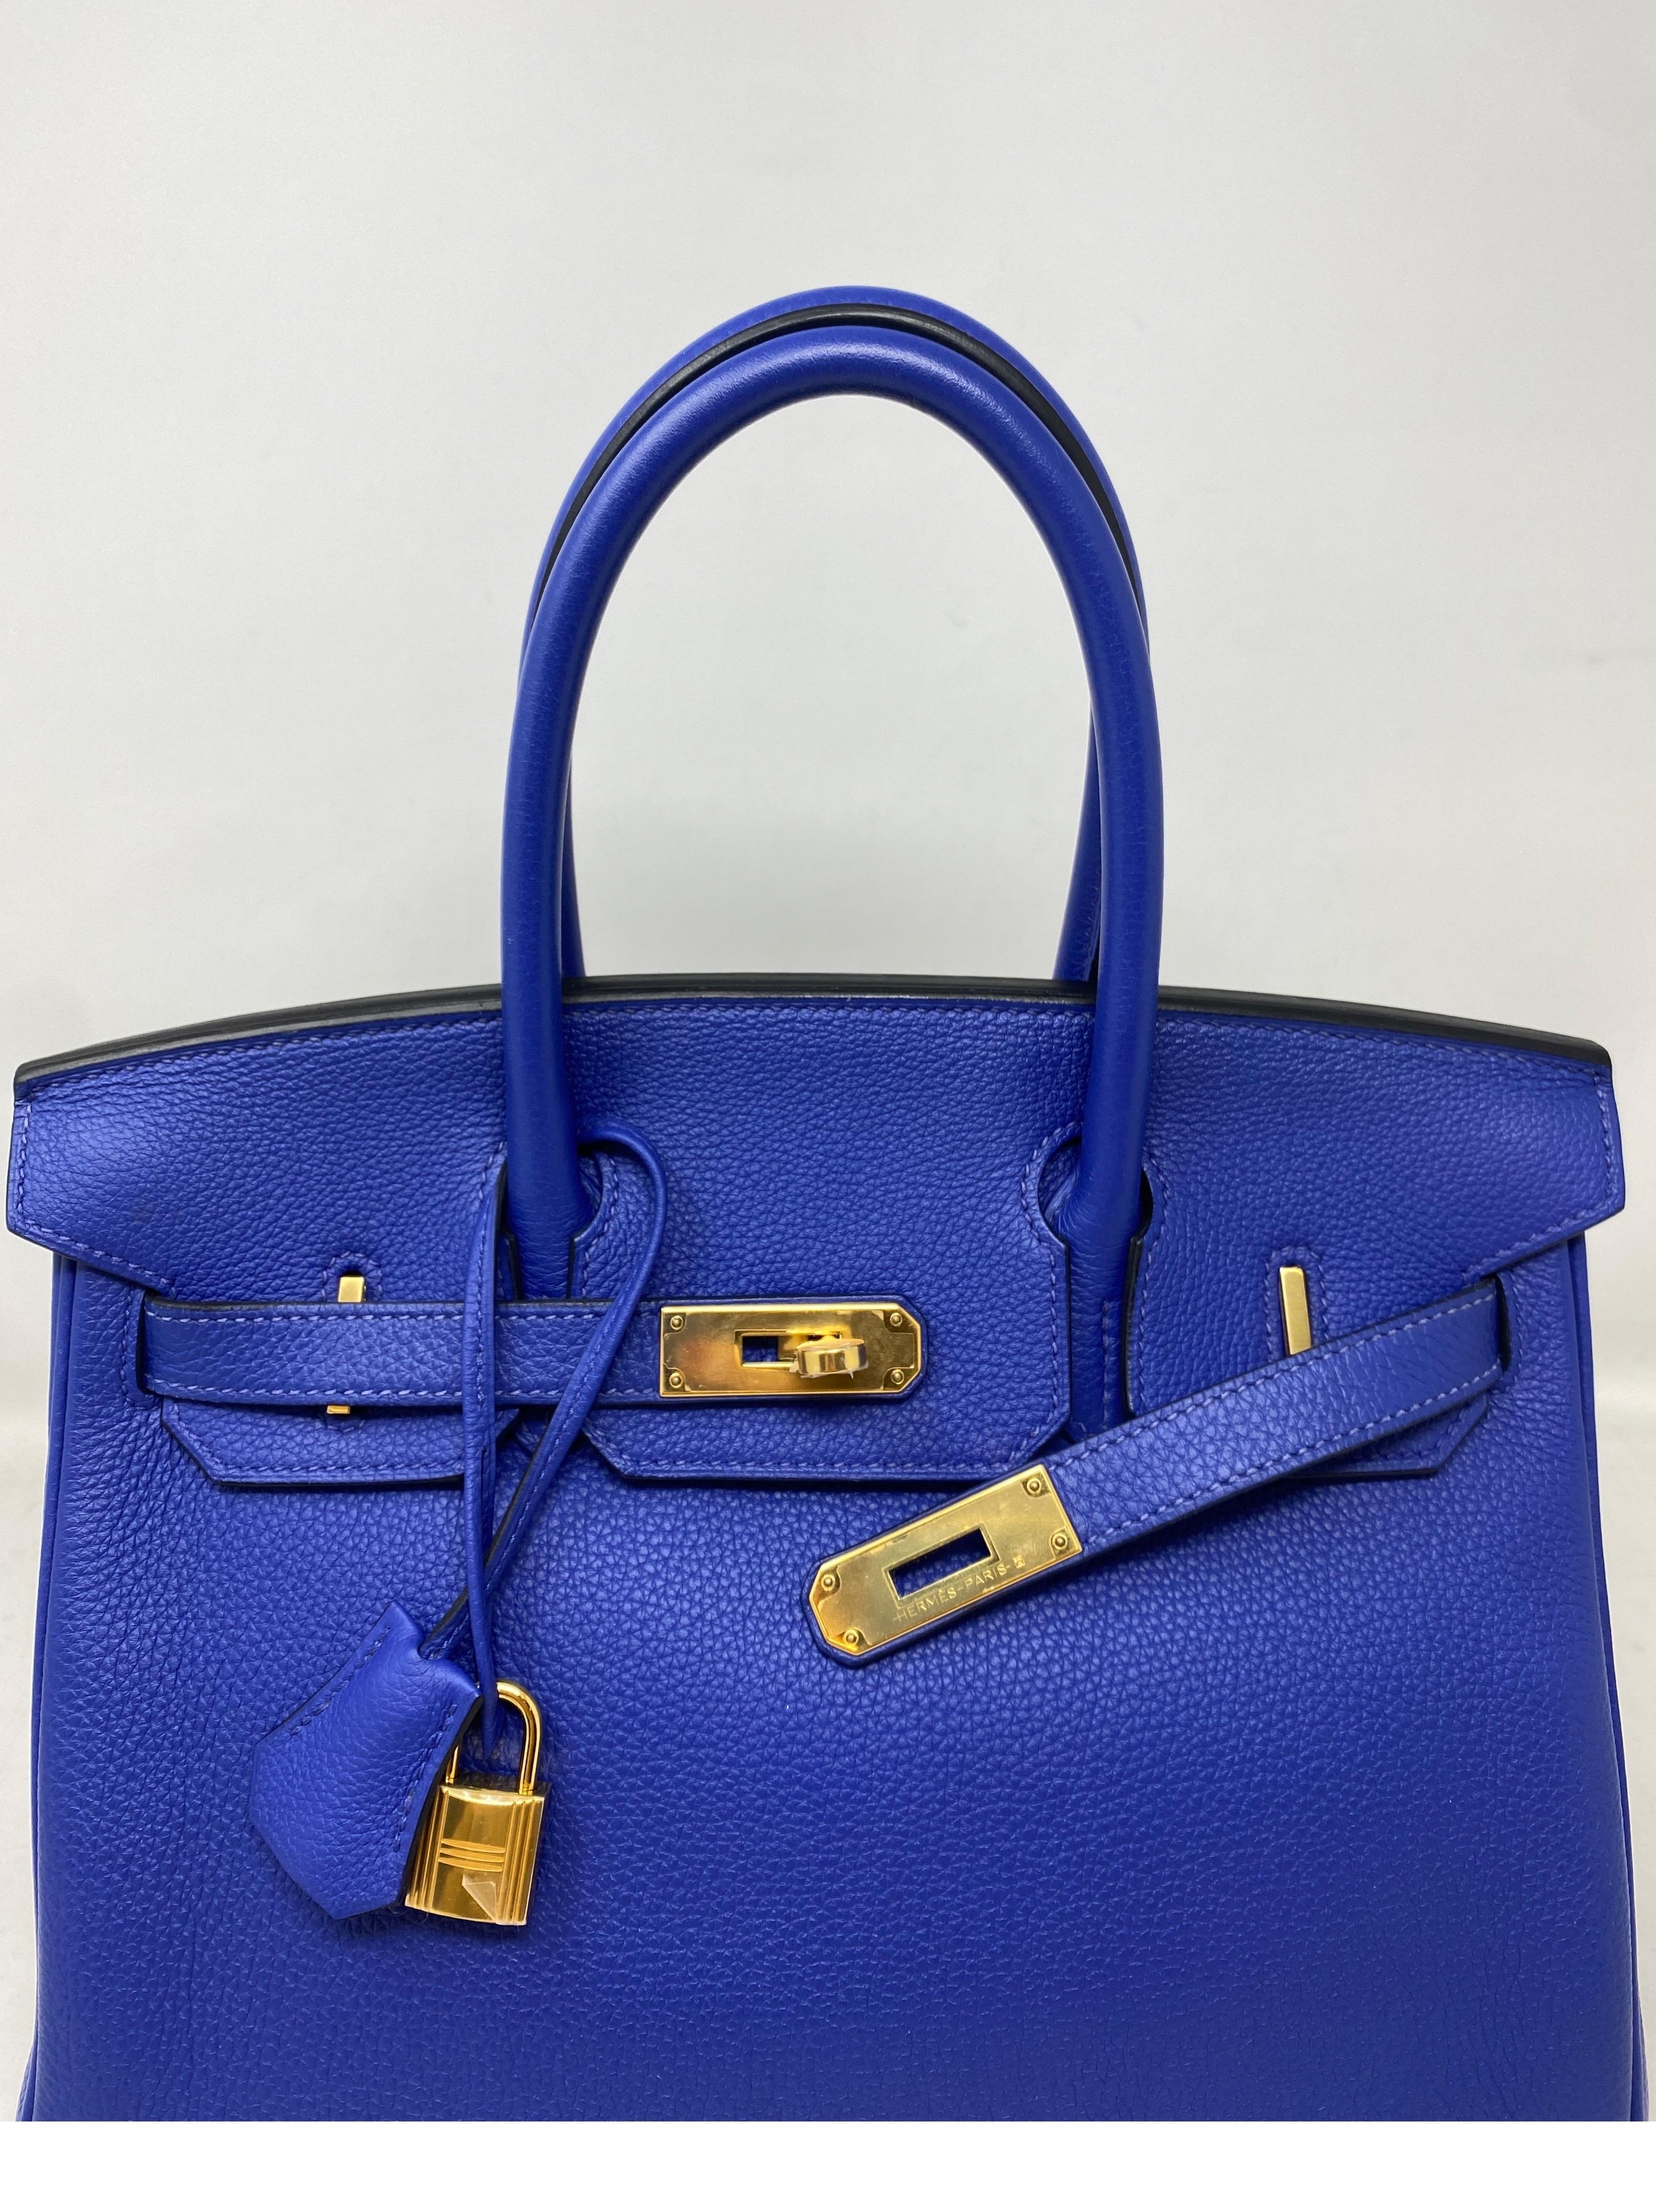 Hermès - Sac Birkin 35 Electrique bleu  5